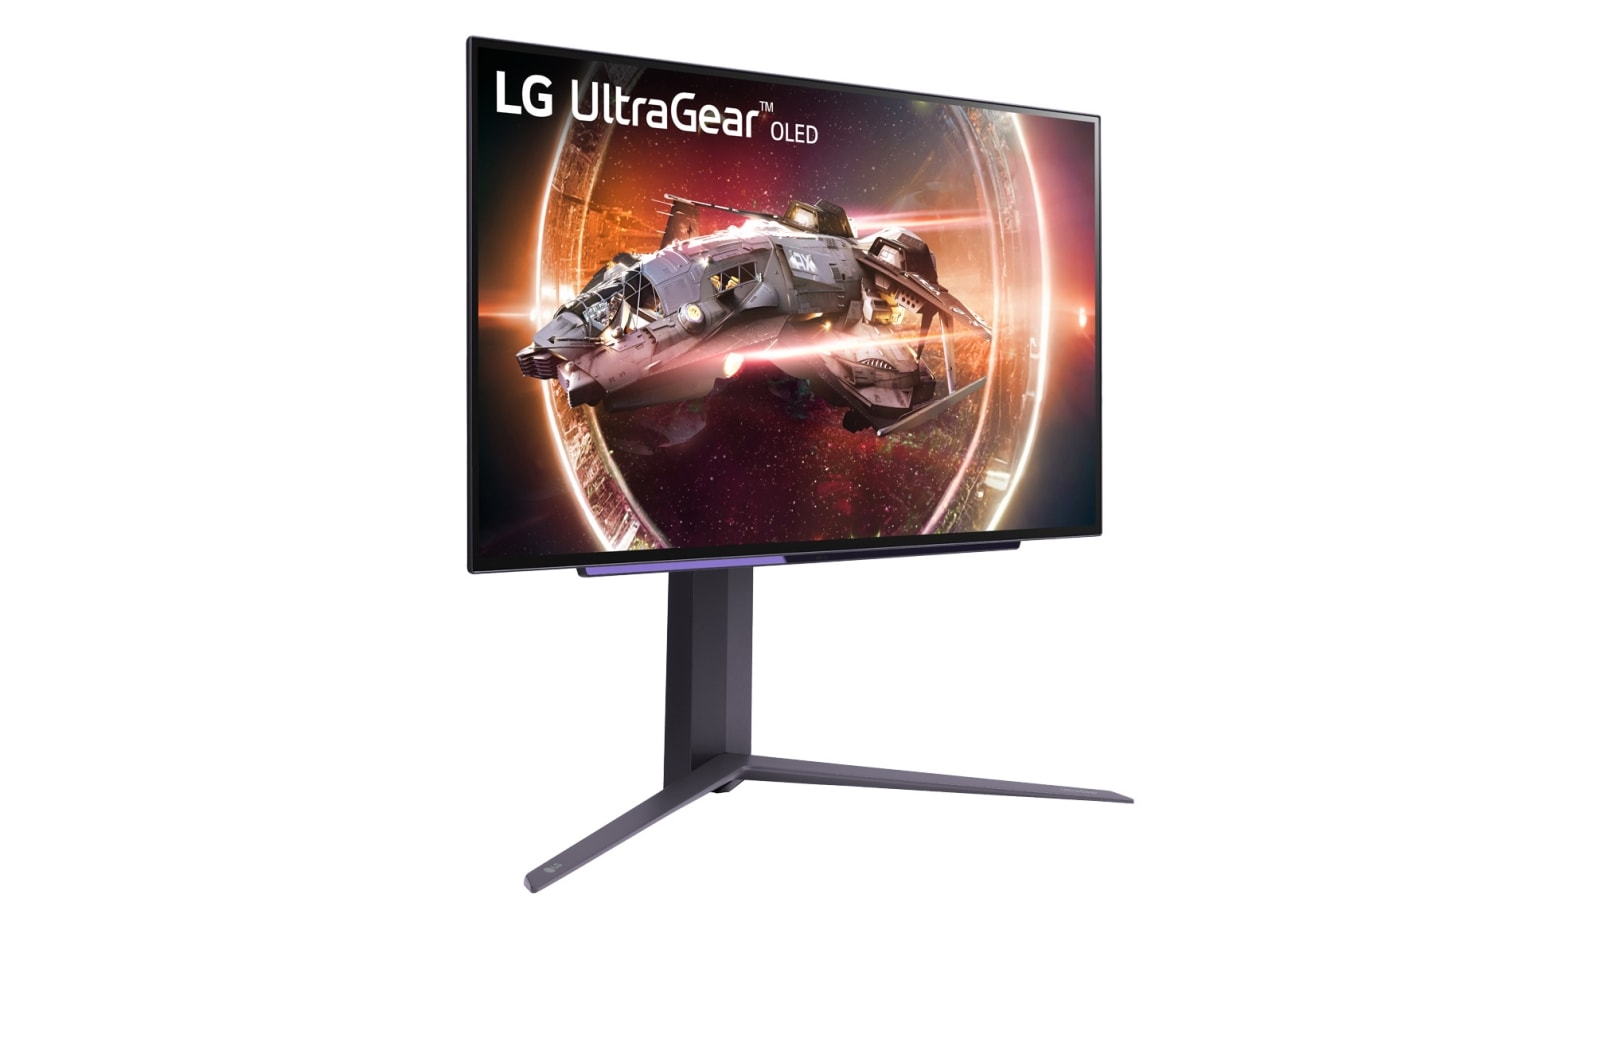 LG UltraGear 27 OLED QHD 240Hz 0.03ms FreeSync and NVIDIA G-SYNC